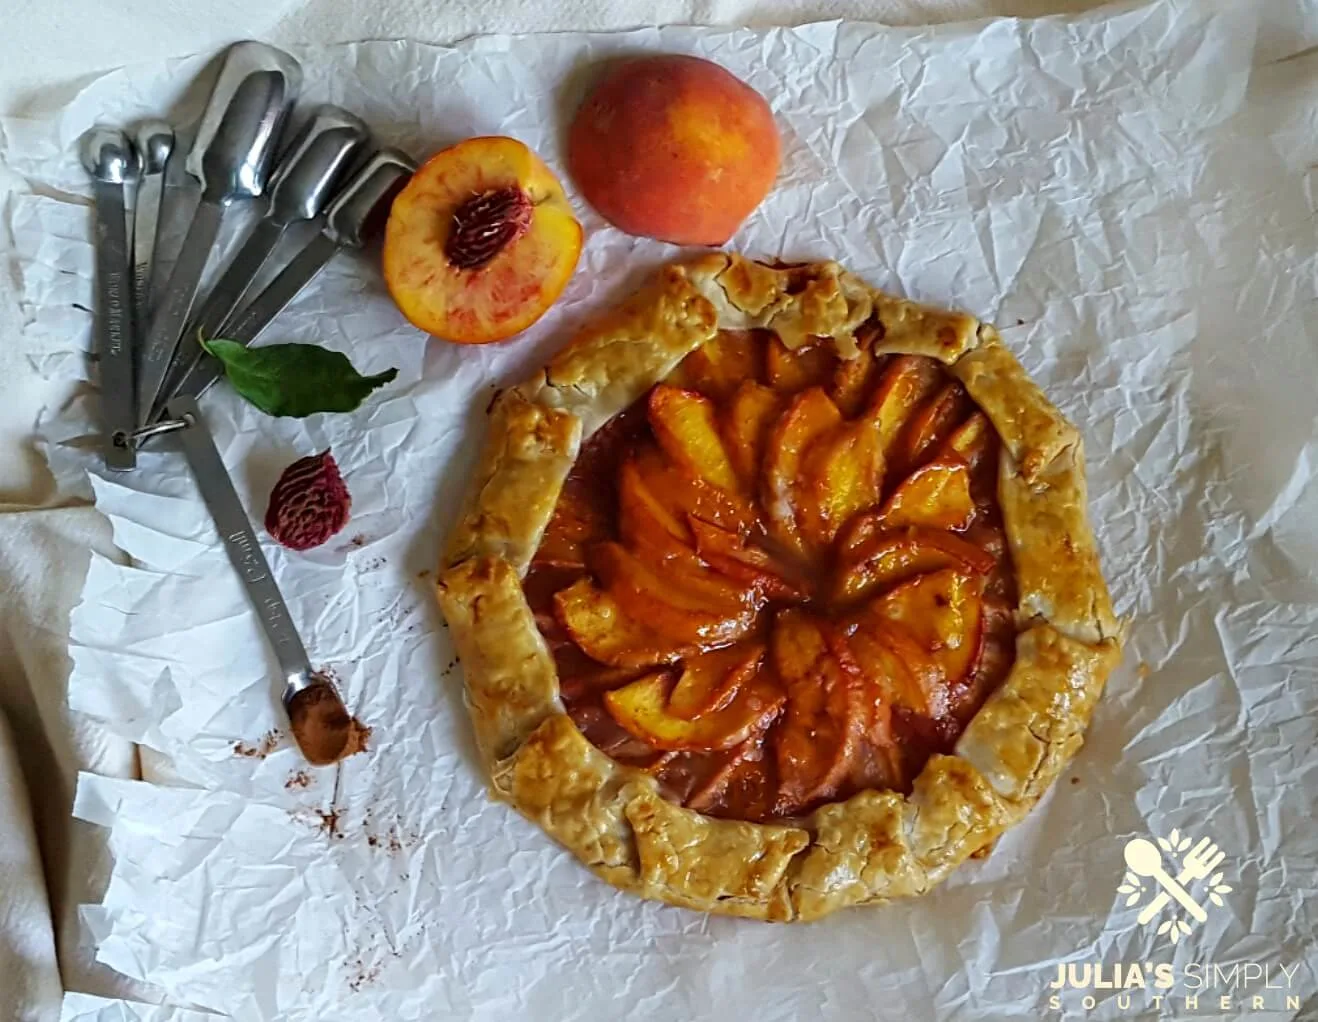 Easy dessert using fresh peaches - Peach Galette - Julia's Simply Southern